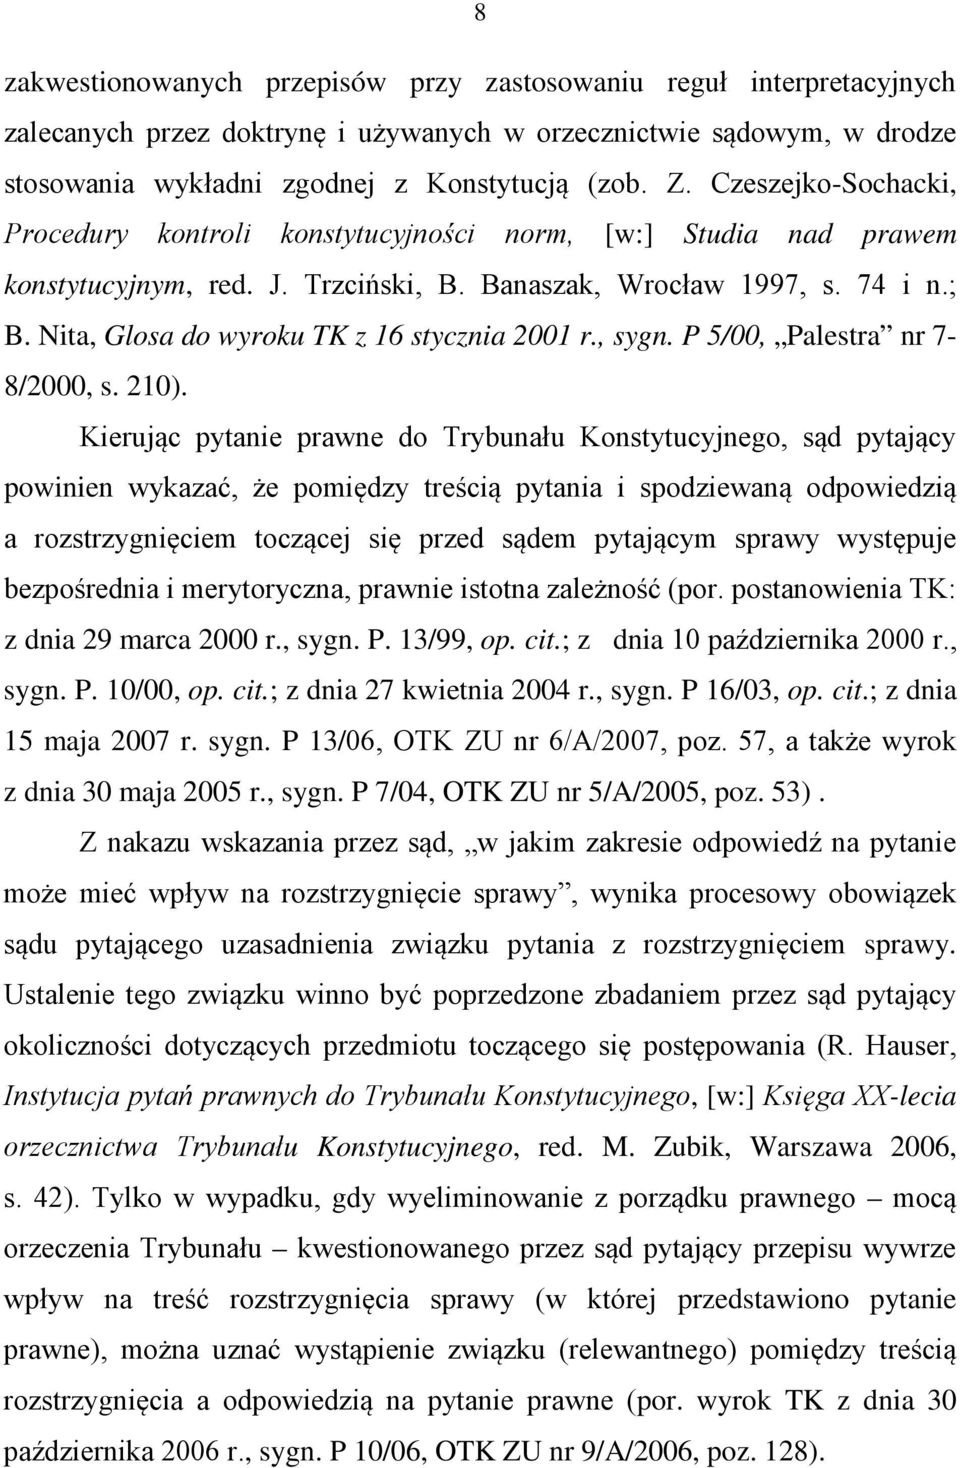 Nita, Glosa do wyroku TK z 16 stycznia 2001 r., sygn. P 5/00, Palestra nr 7-8/2000, s. 210).